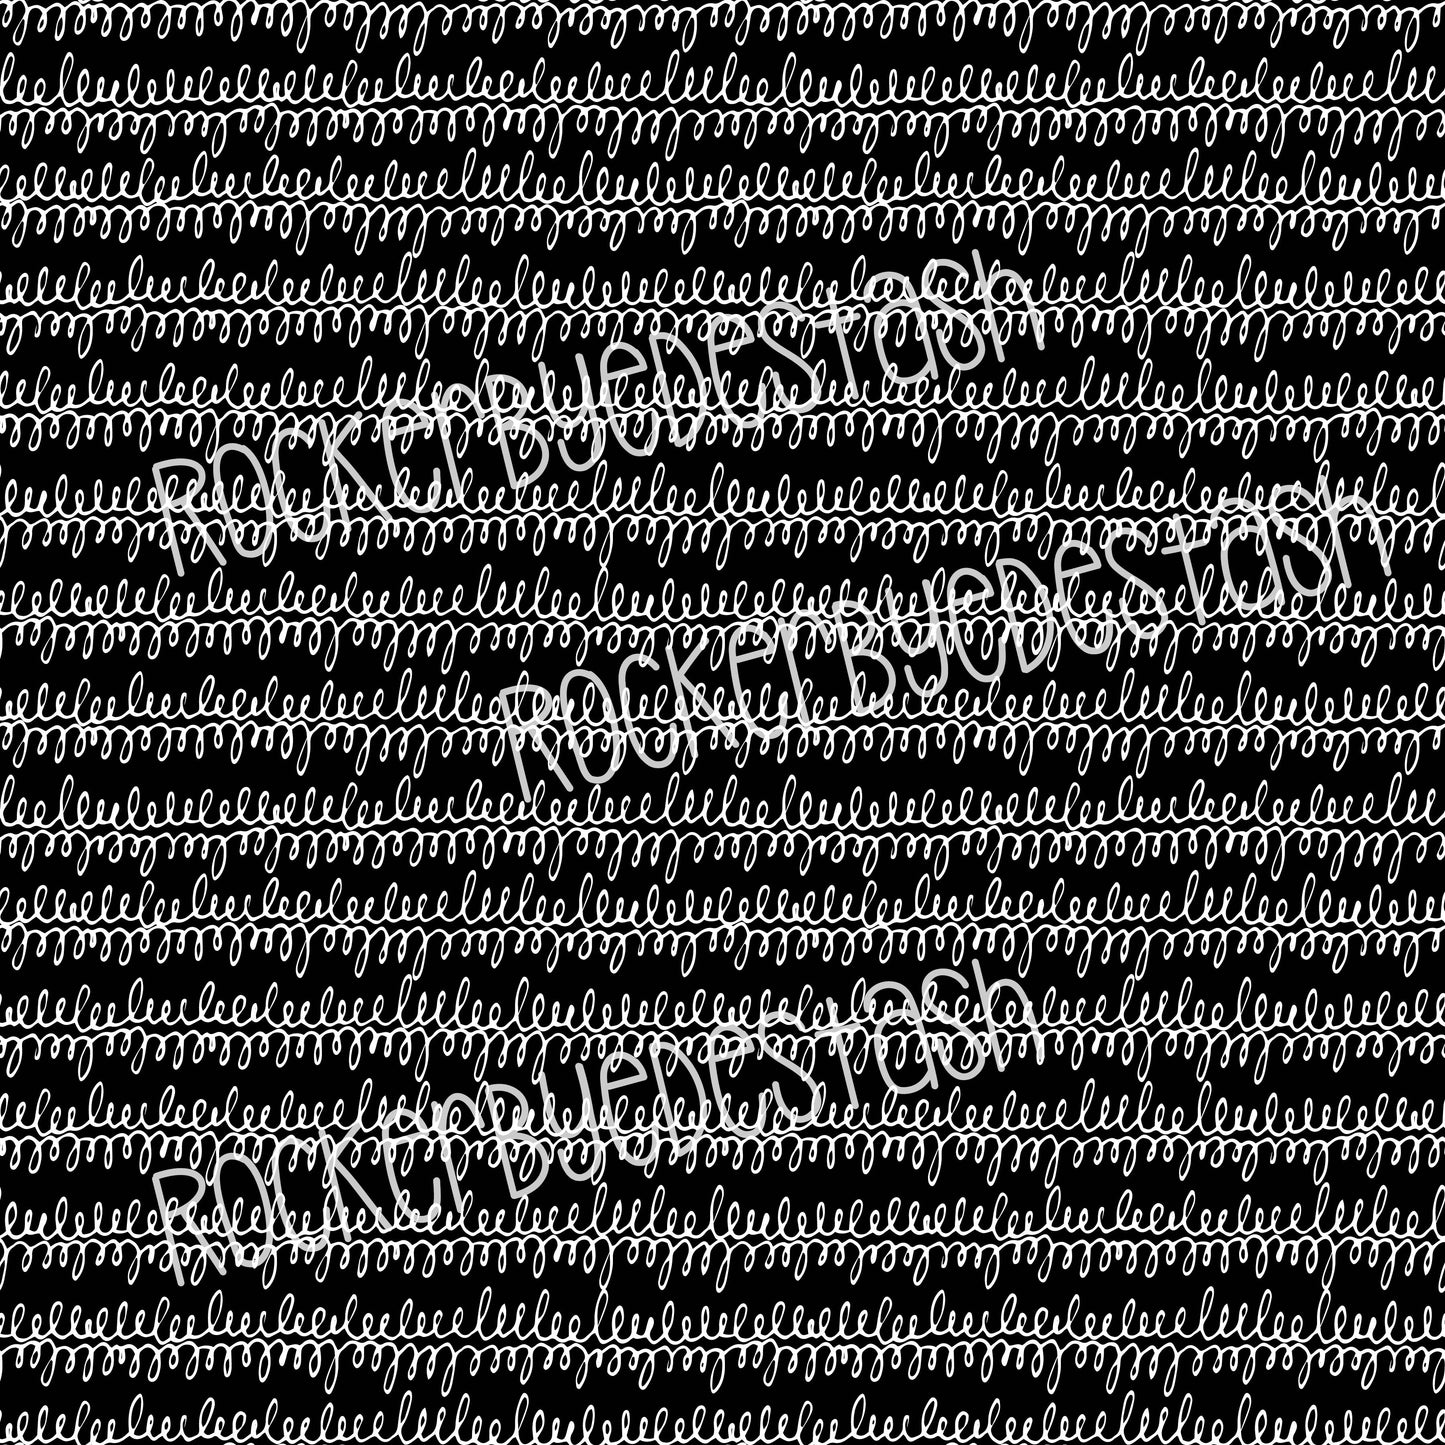 RETAIL Minky ACCENT prints - 1 yard per quantity Coordinate designs Black and white